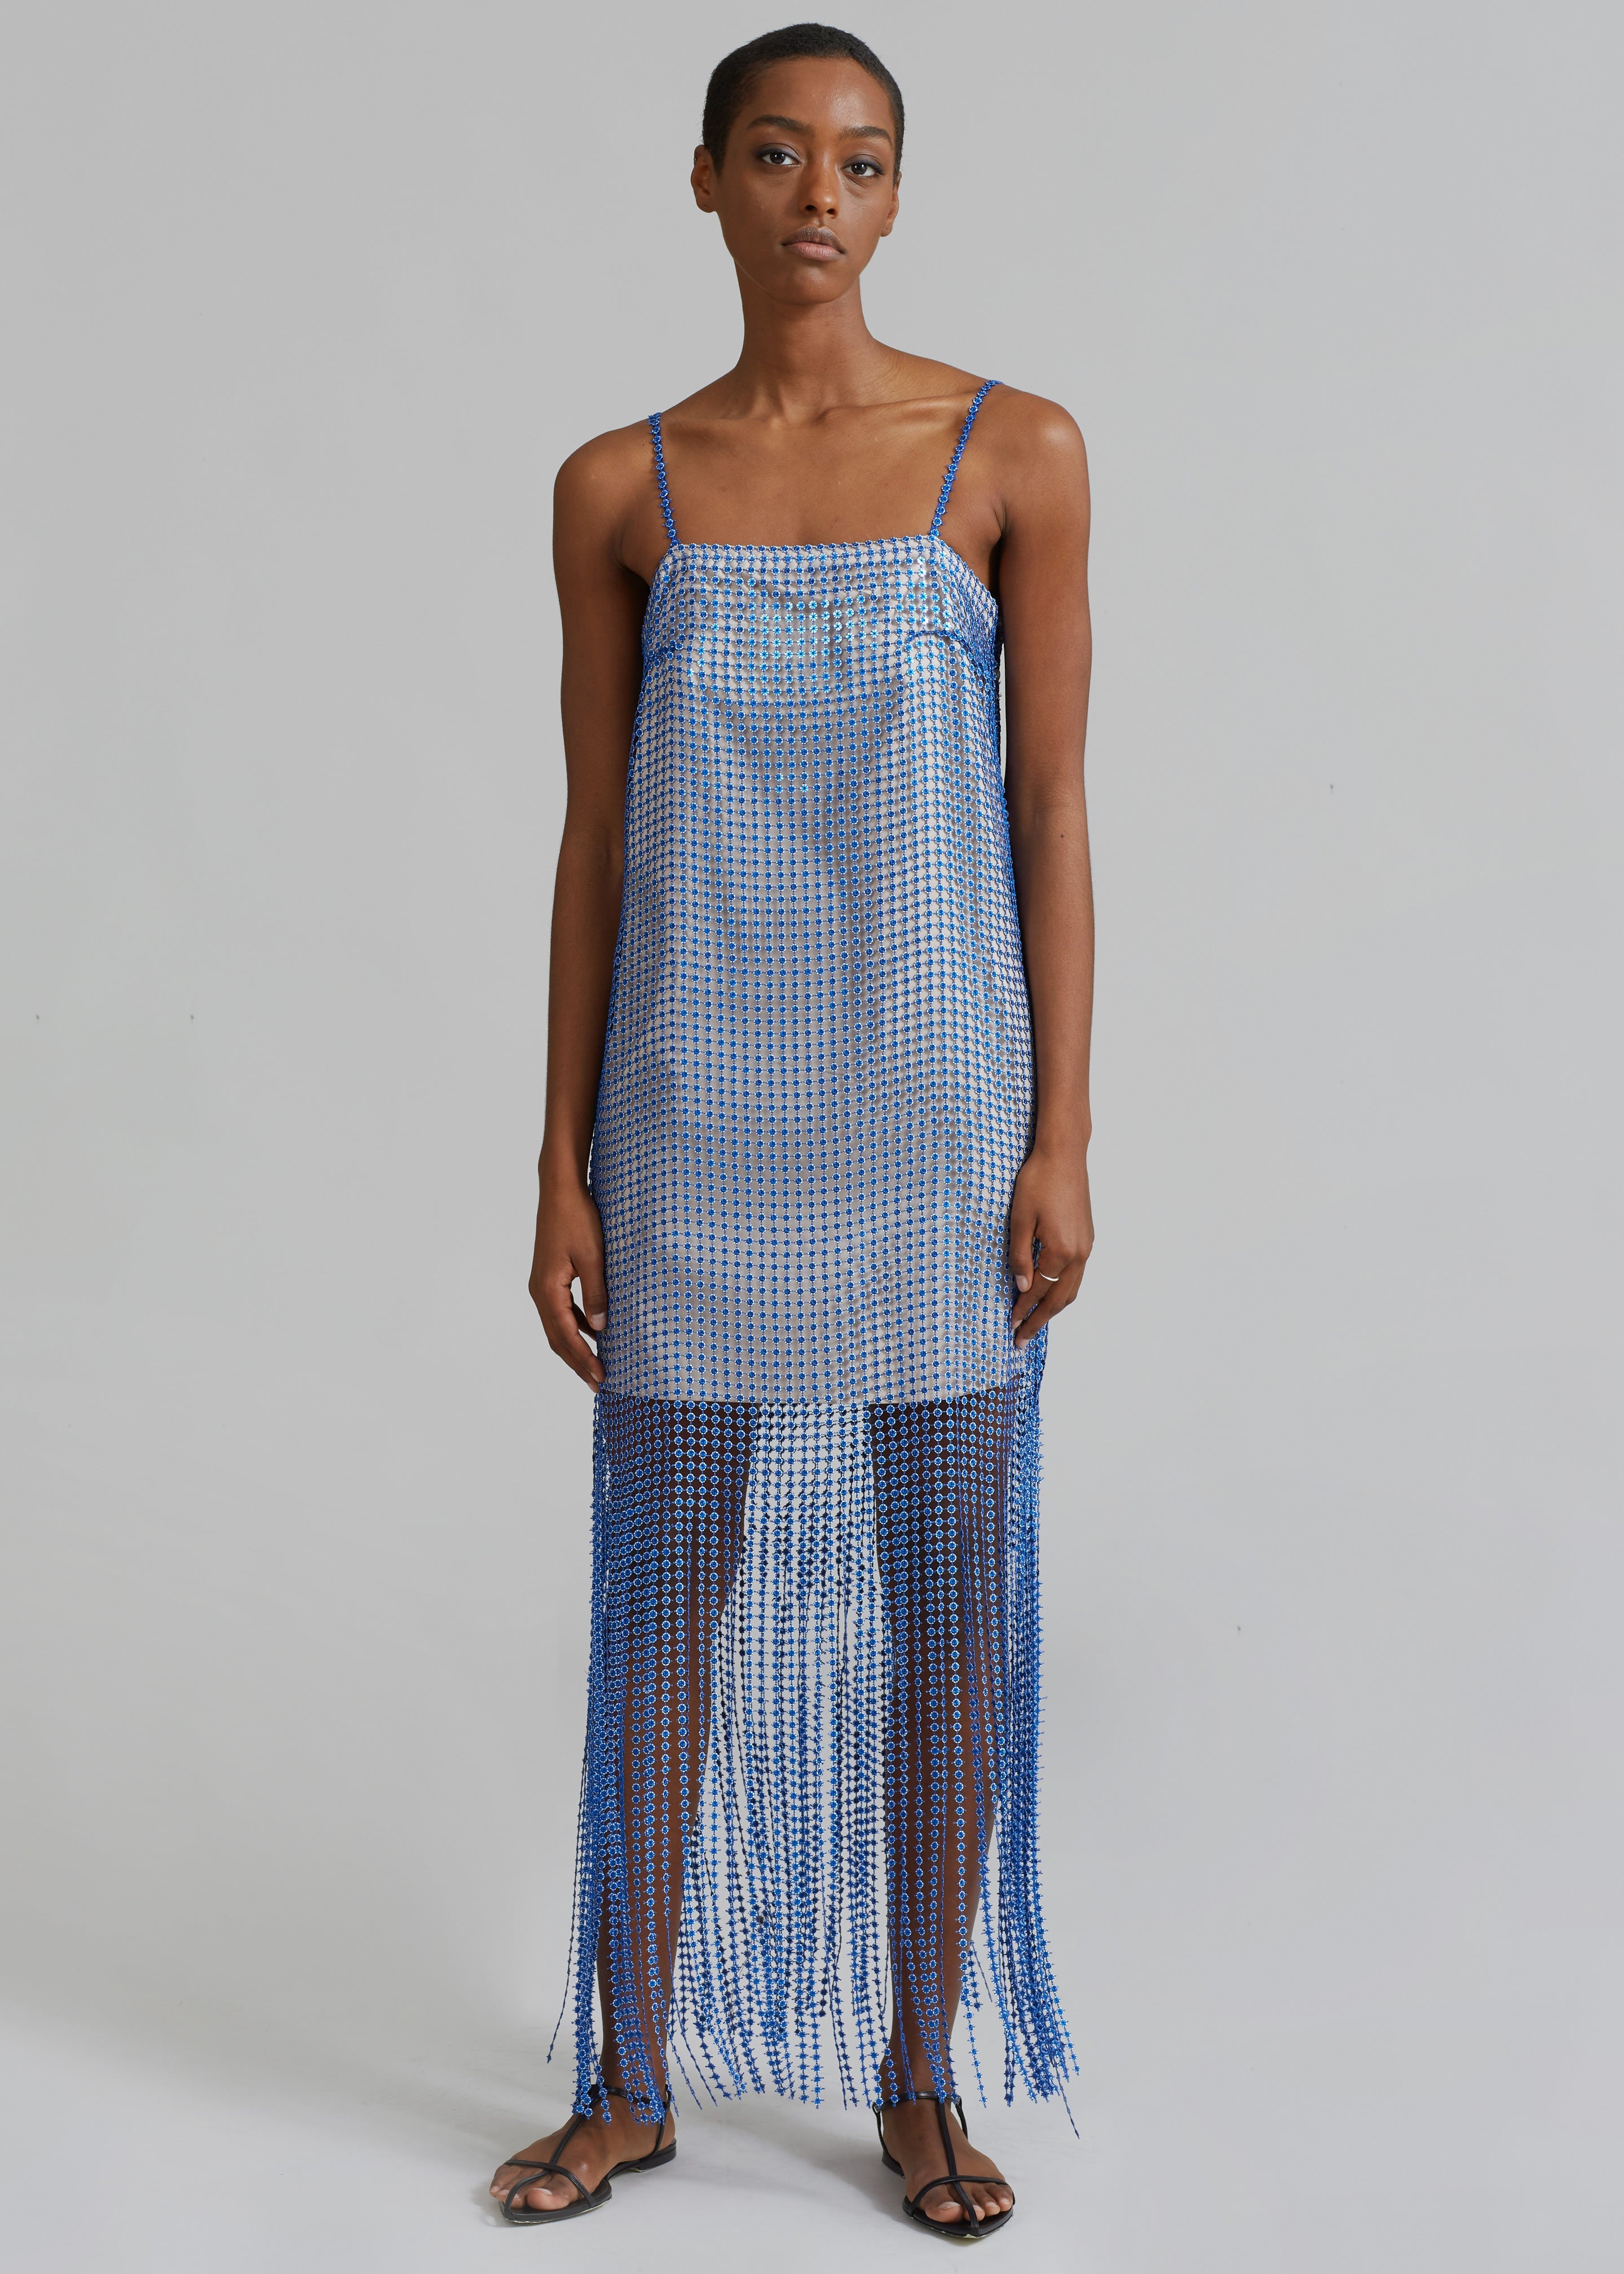 REMAIN Sequin Lace Fringe Dress - Surf The Web Comb. - 4